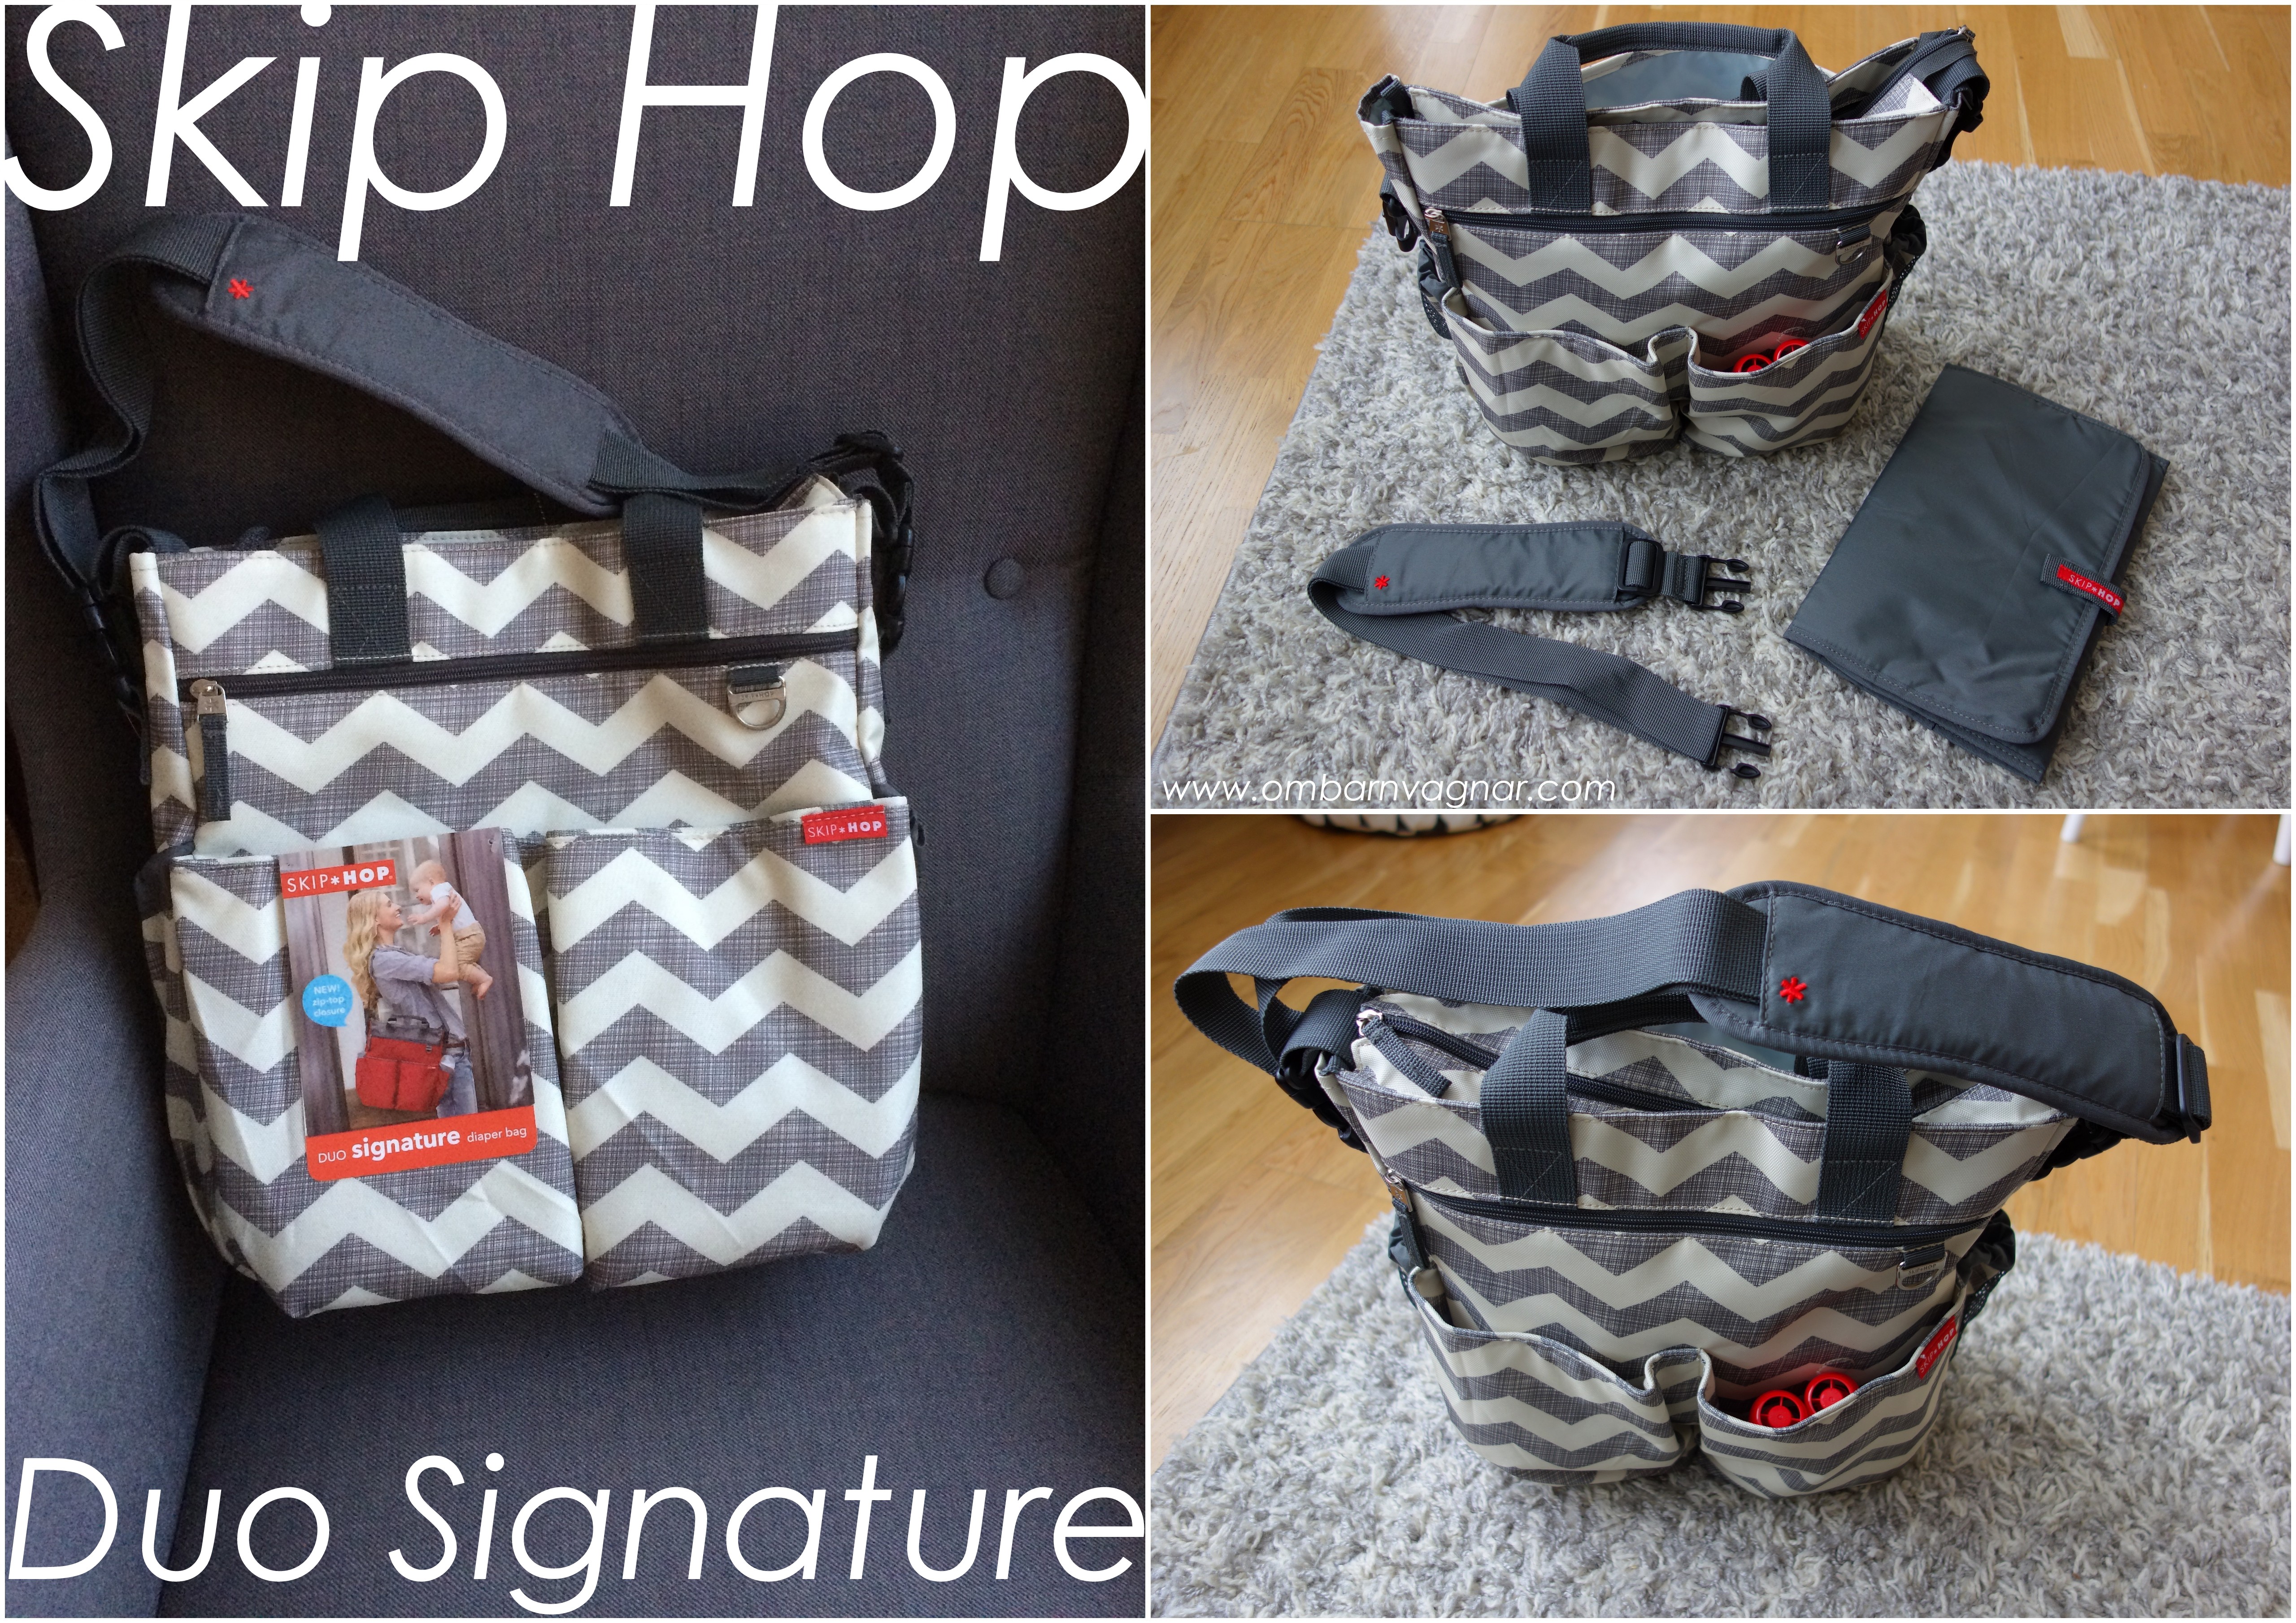 Recension av Skip Hop Duo Signature